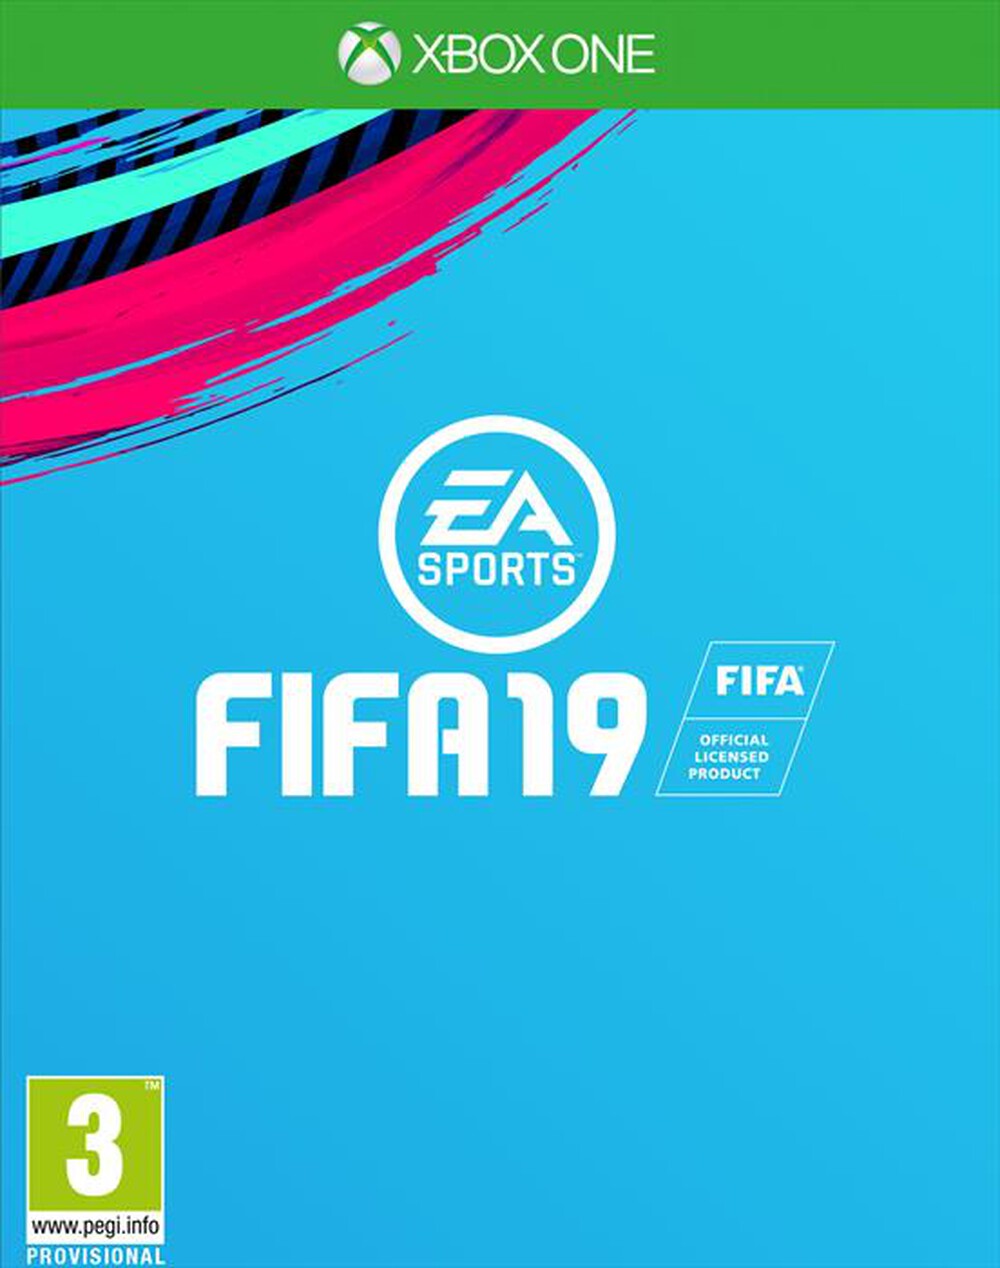 "ELECTRONIC ARTS - FIFA 19 XBOX ONE"